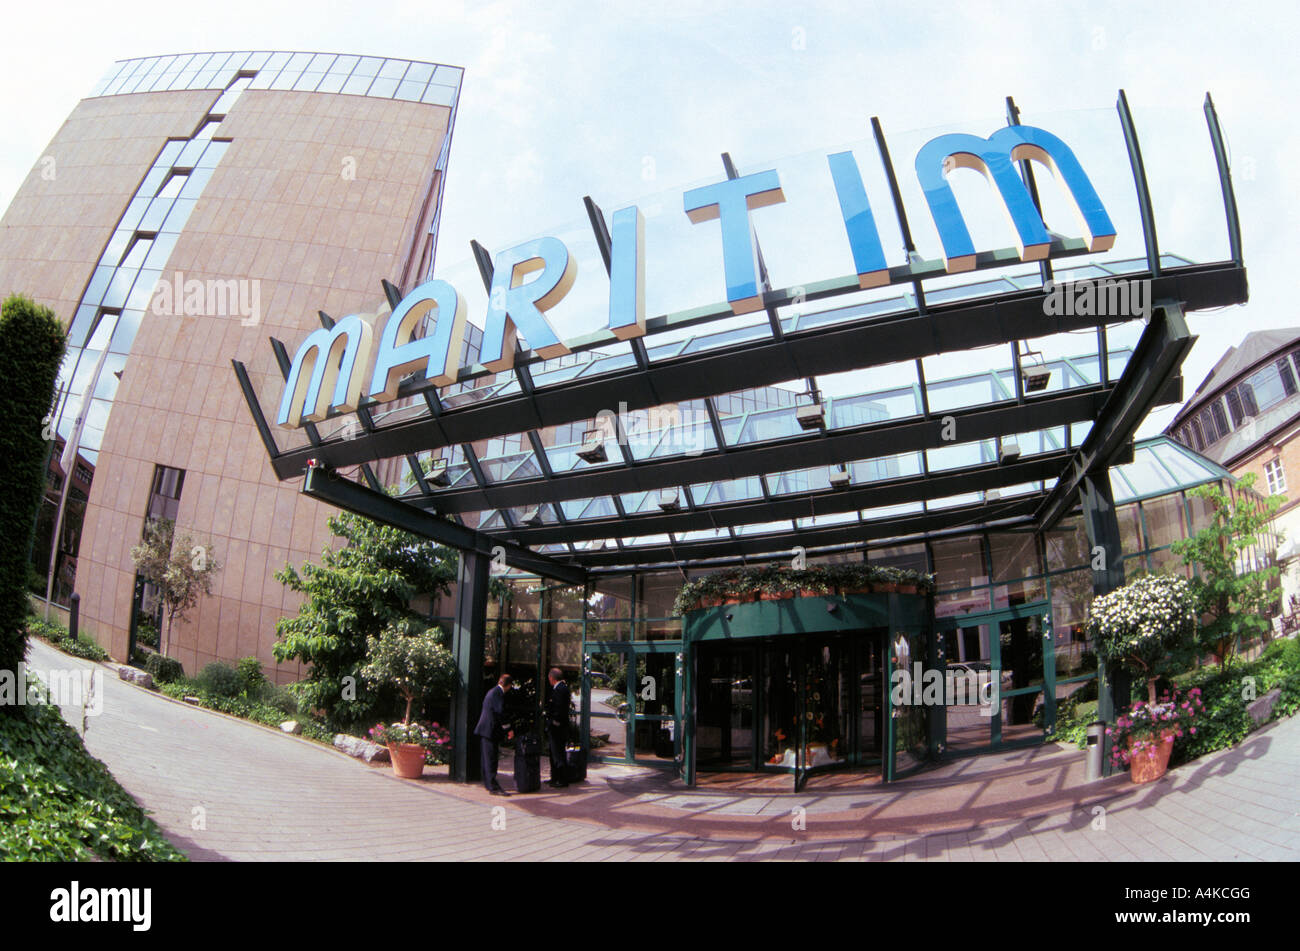 Entrance to the hotel Maritim in Stuttgart Germany Stock Photo